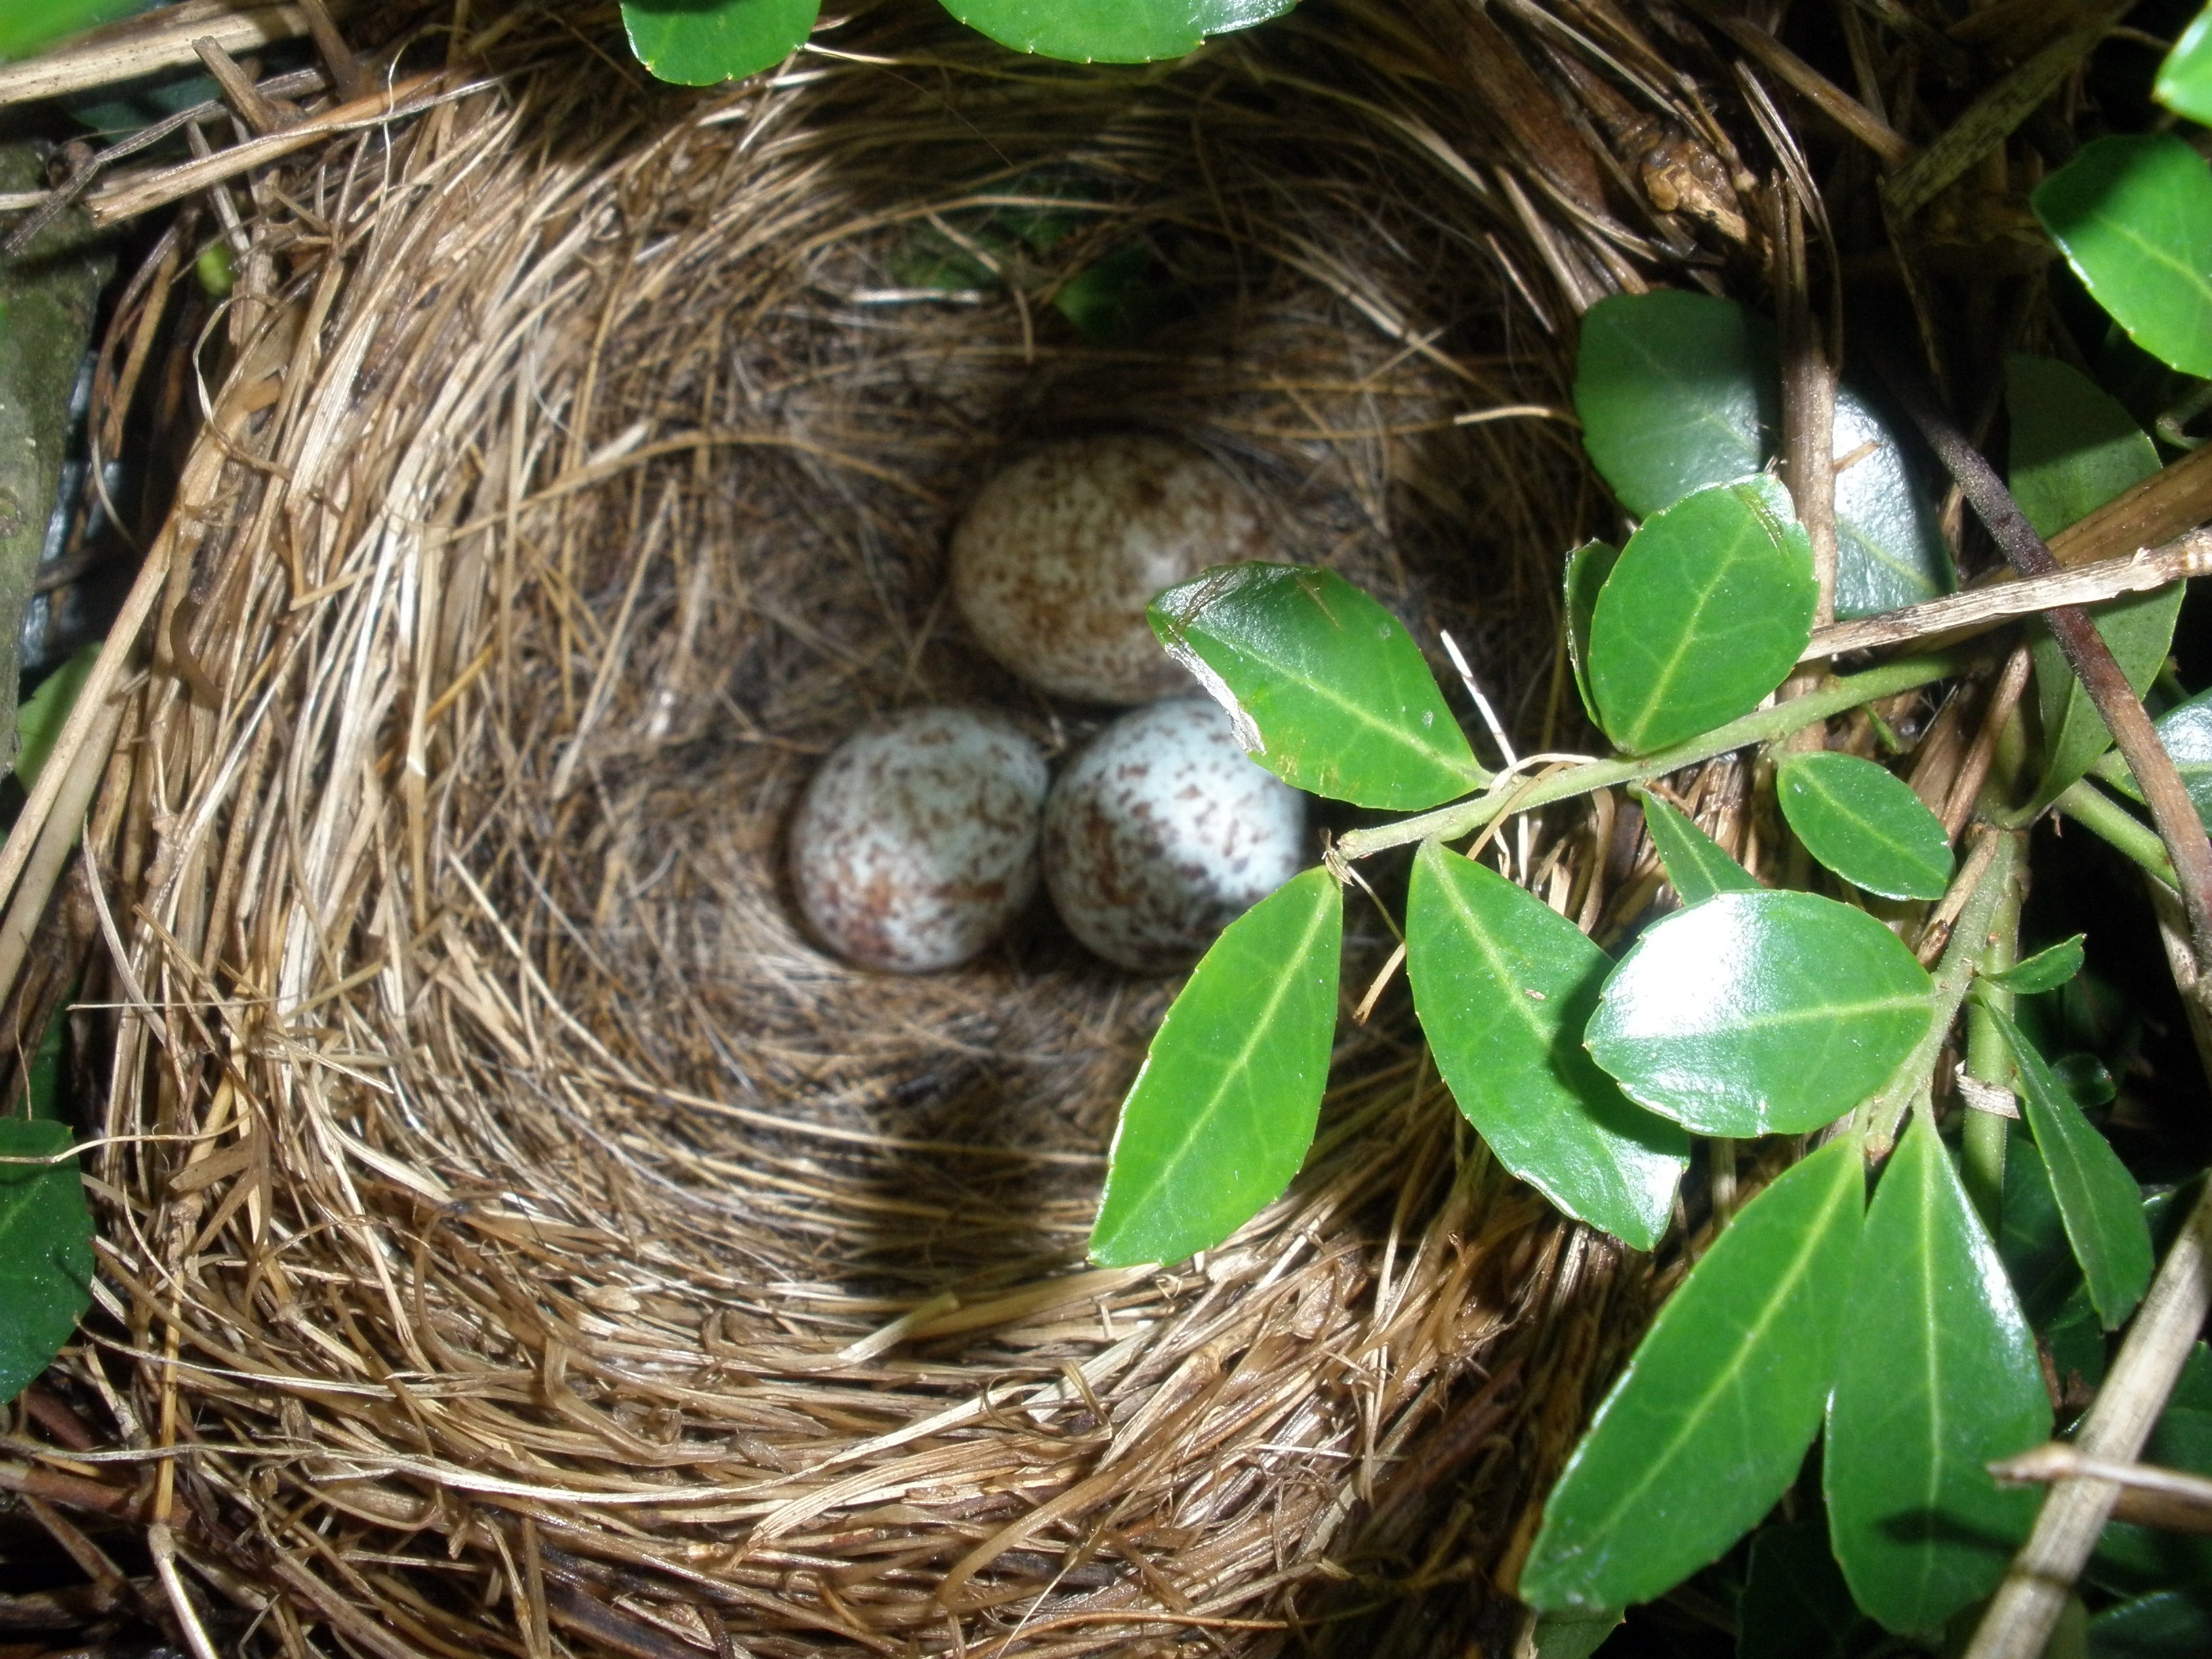 File:Bird Nest (3600492937).jpg - Wikimedia Commons